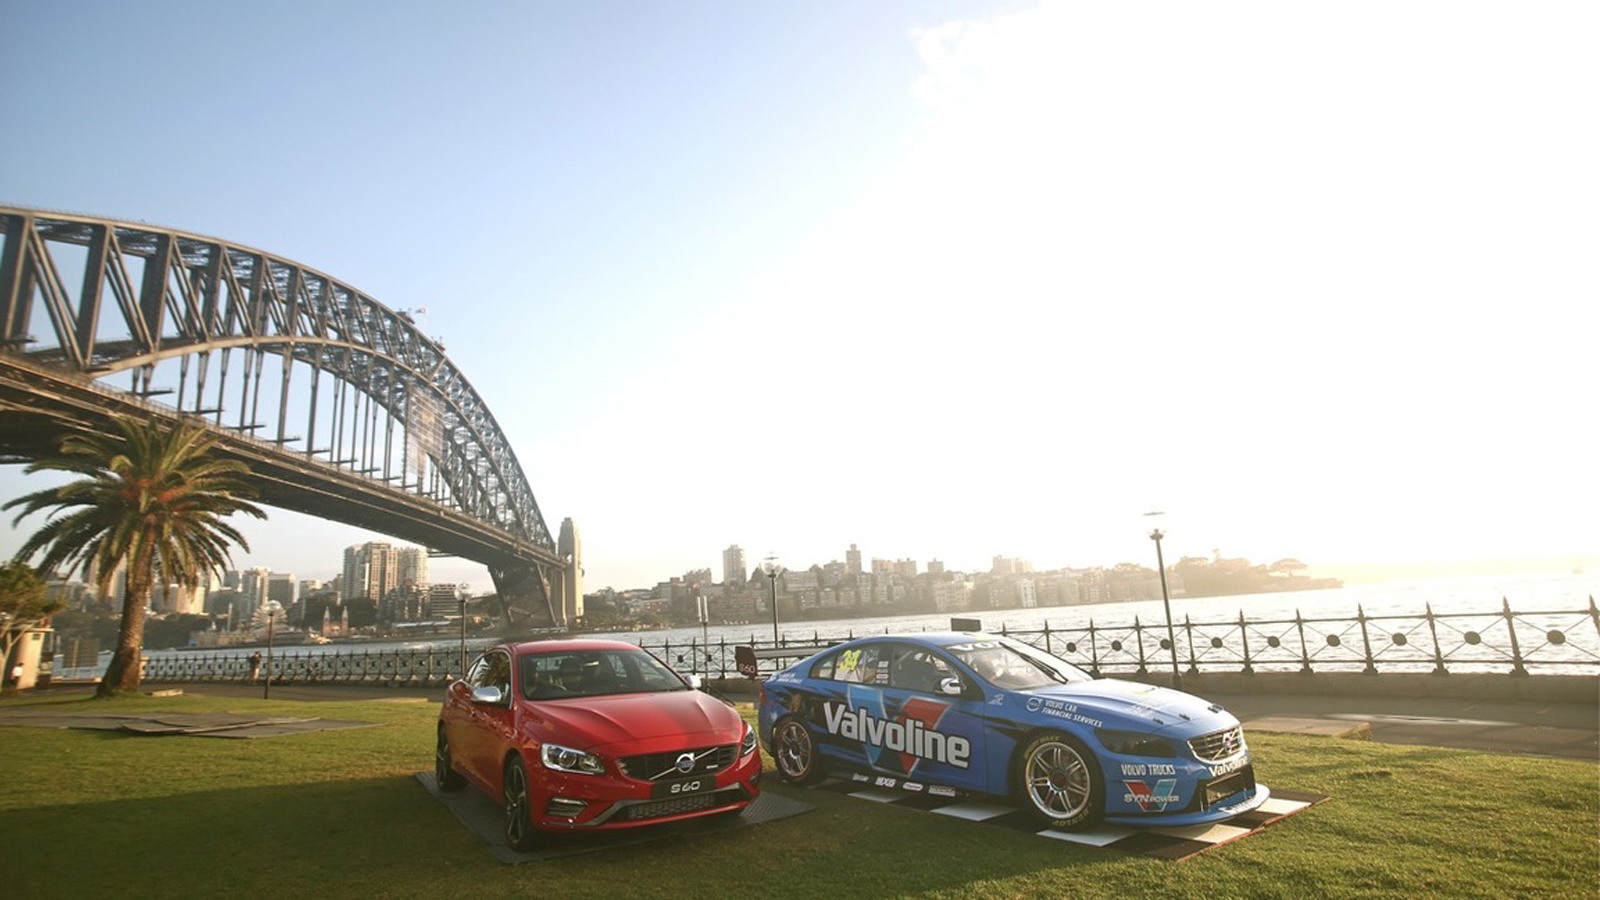 2014 Volvo S60 V8 Supercars race car